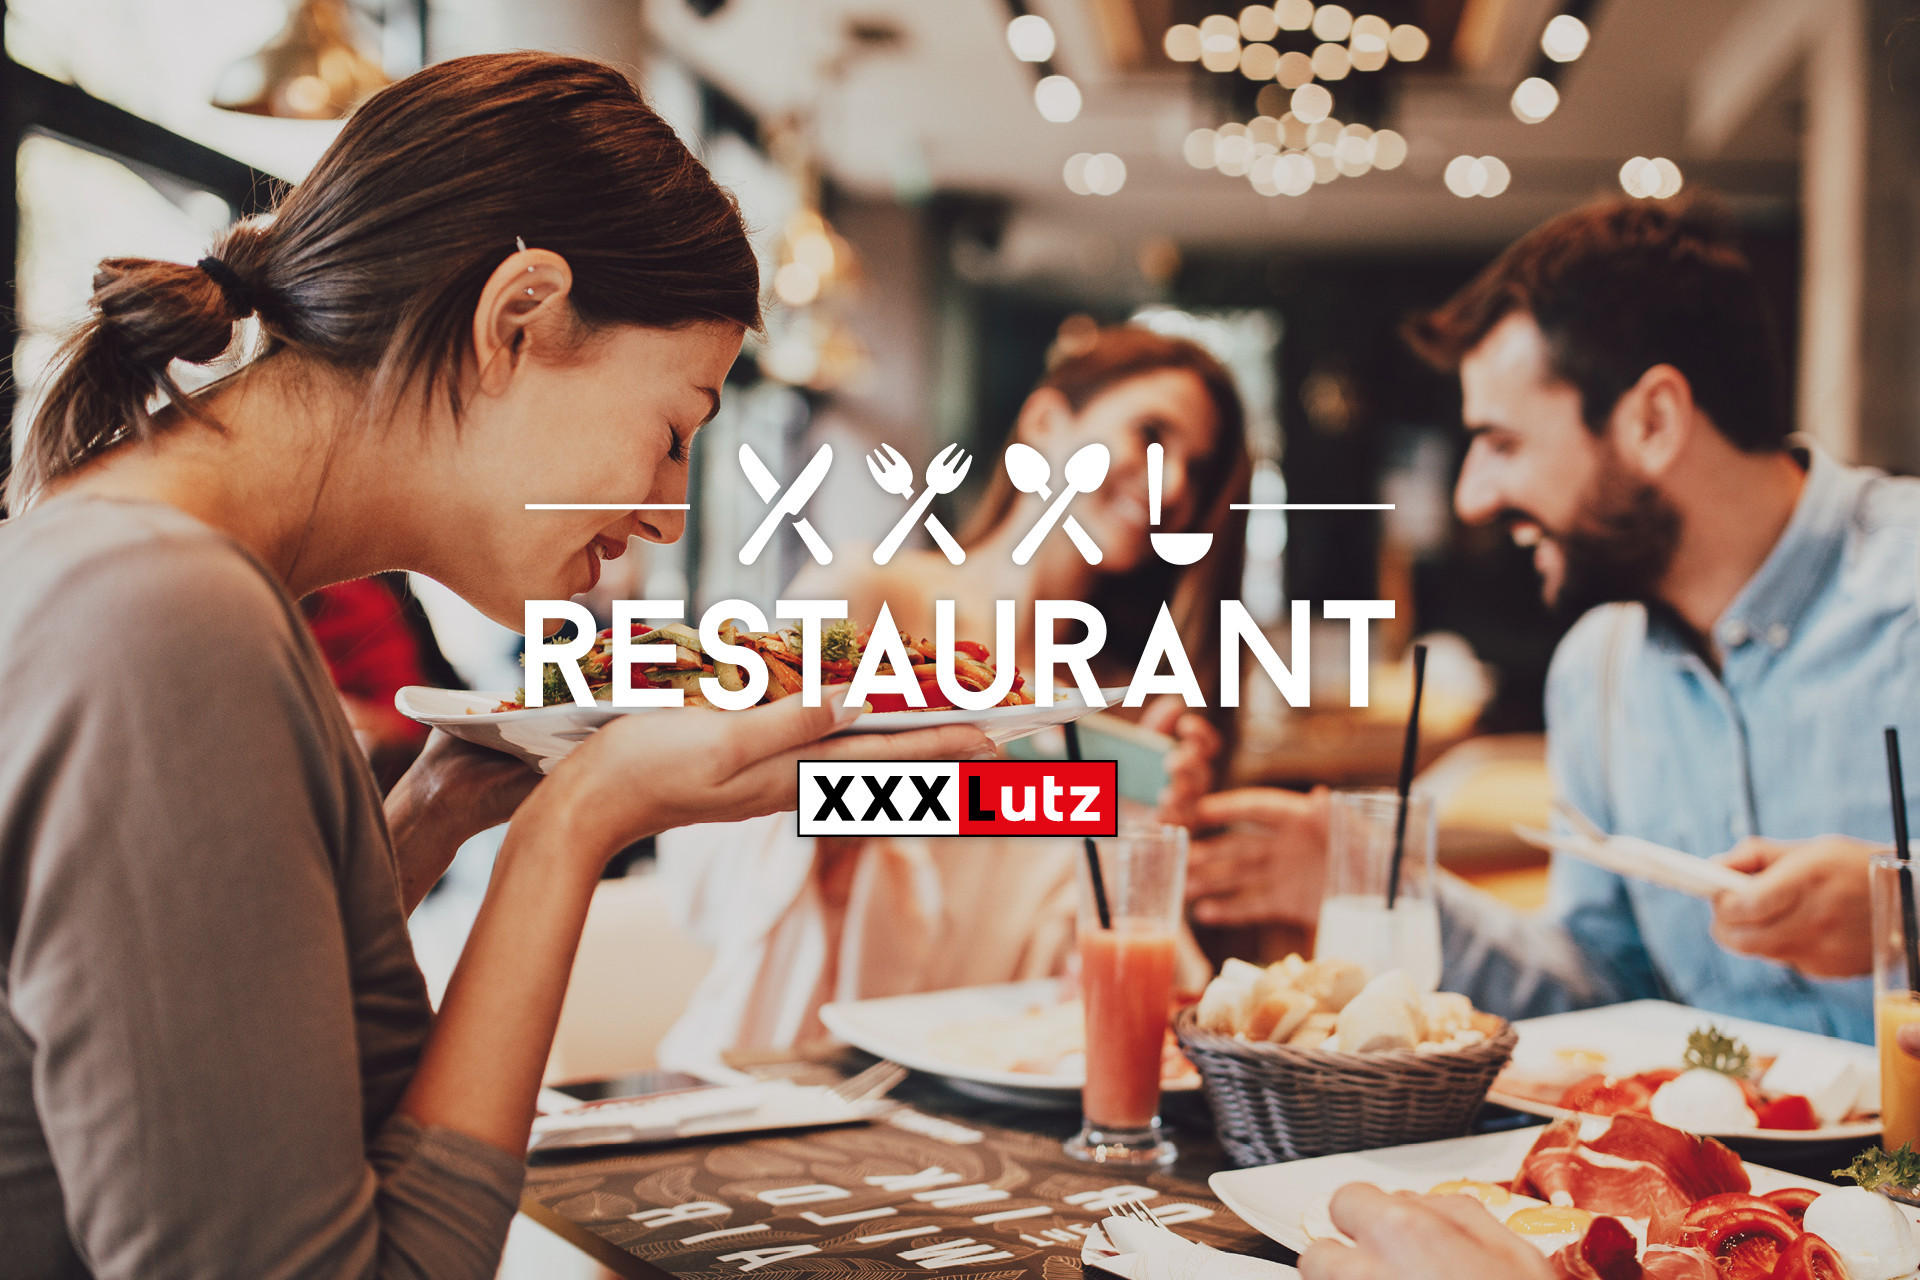 xxxl-restaurant-xxxlutz-mobile.png